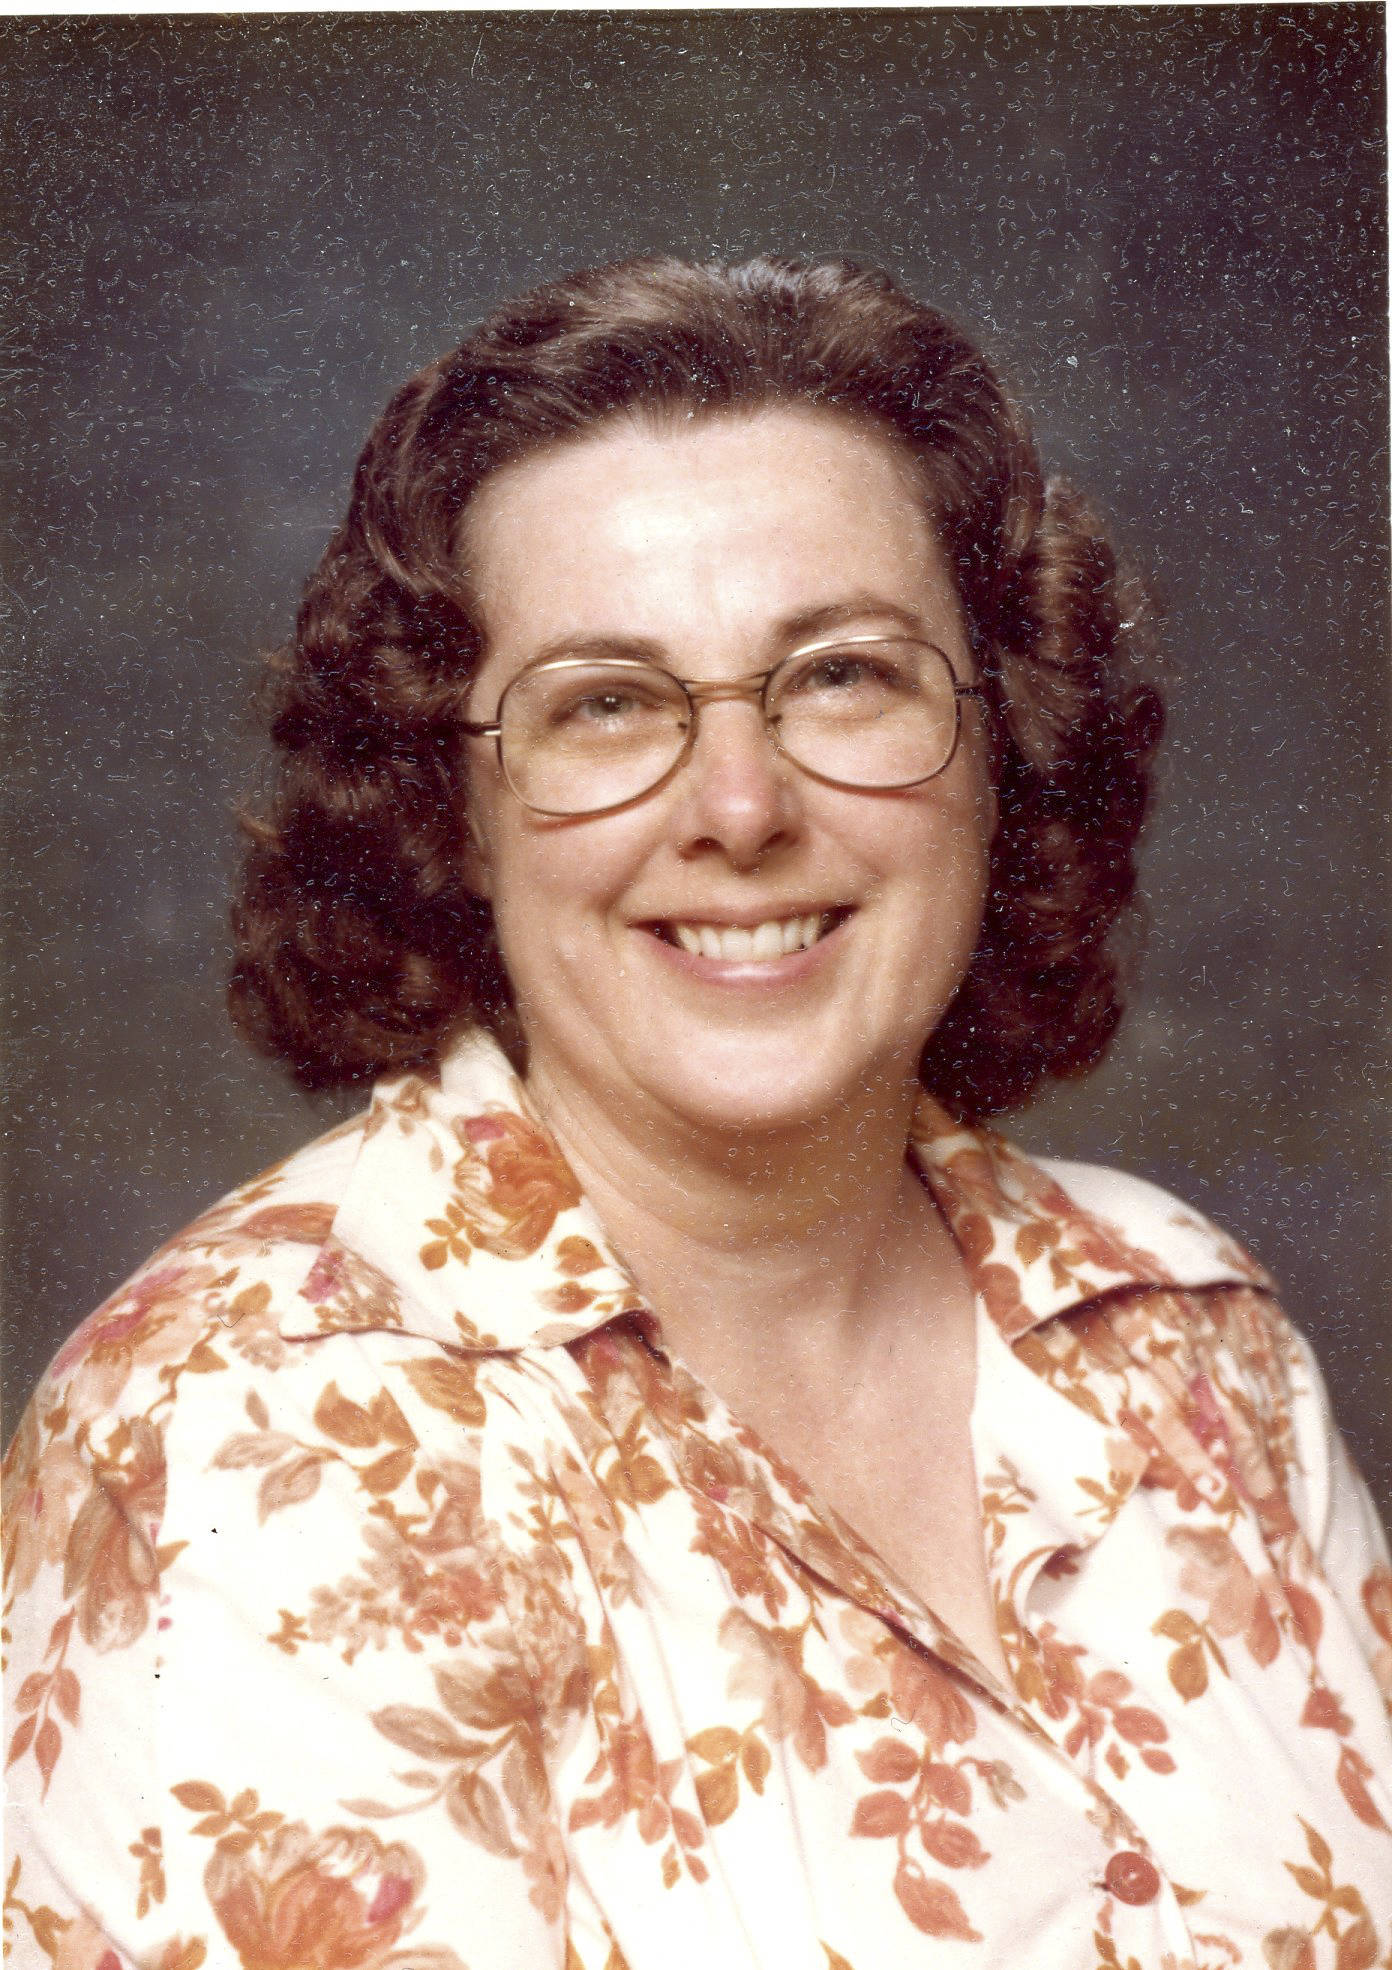 Charlotte Elene (Briggs) ChevrierMarch 4, 1932 – May 9, 2020